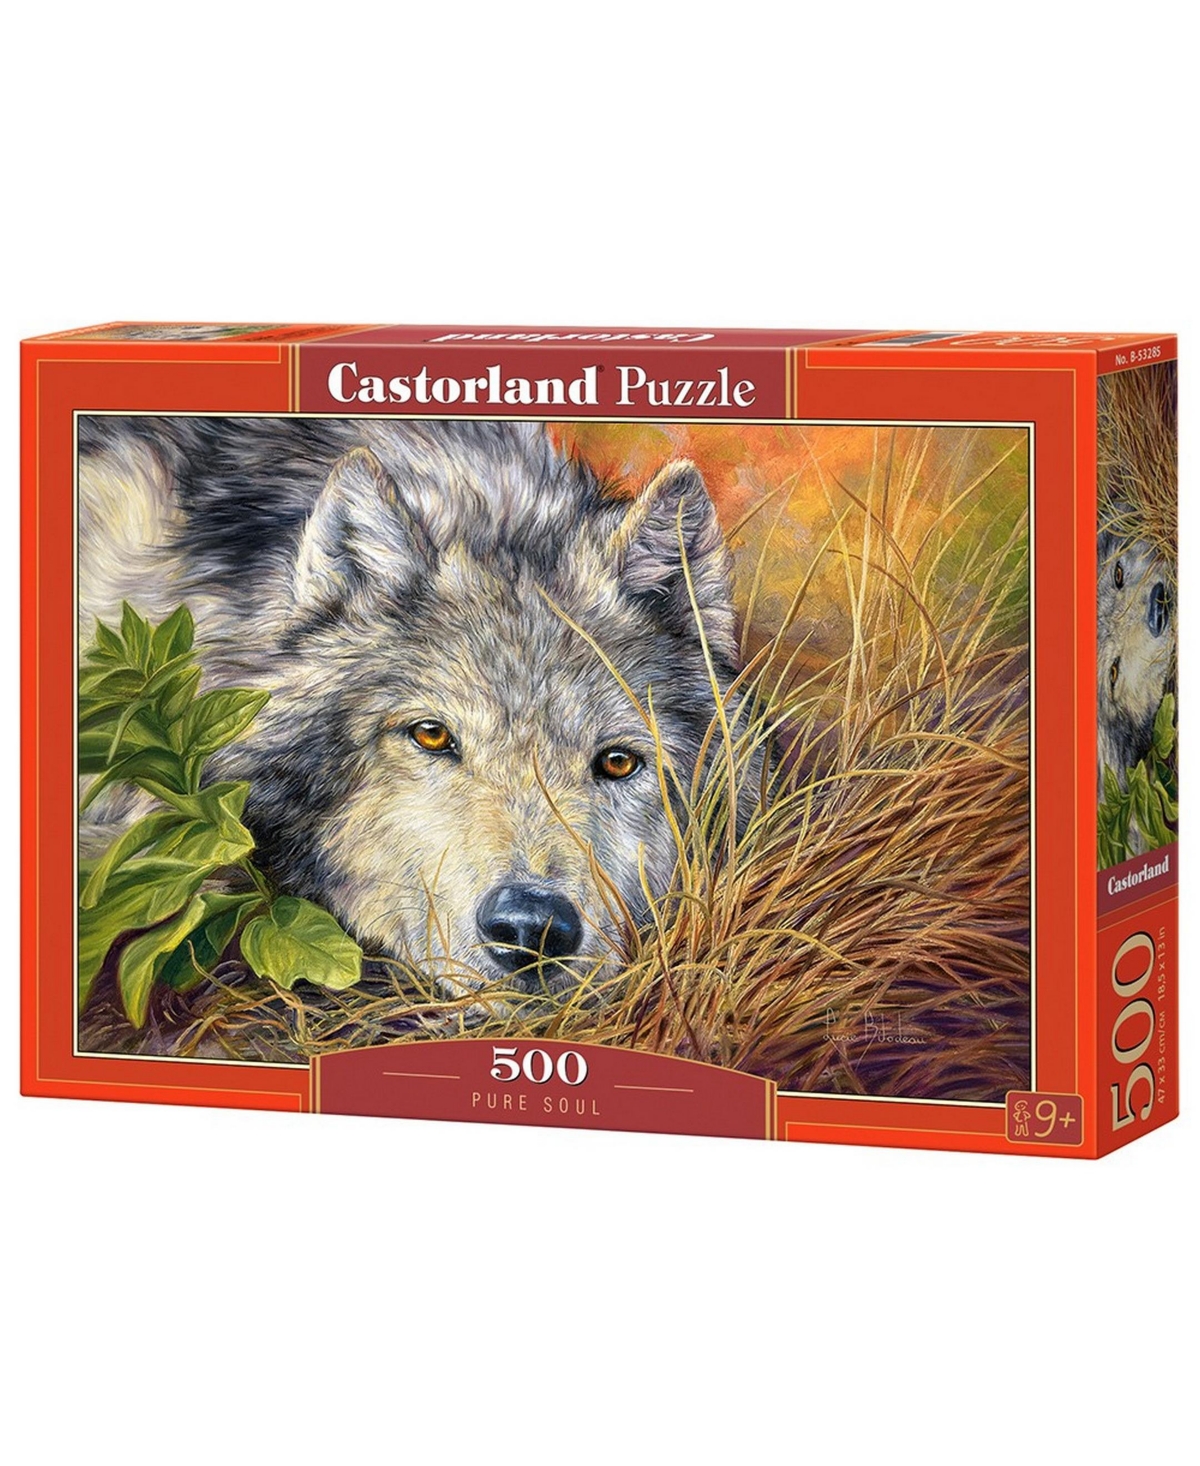 Castorland Pure Soul Jigsaw Puzzle Set, 500 Piece In Multicolor